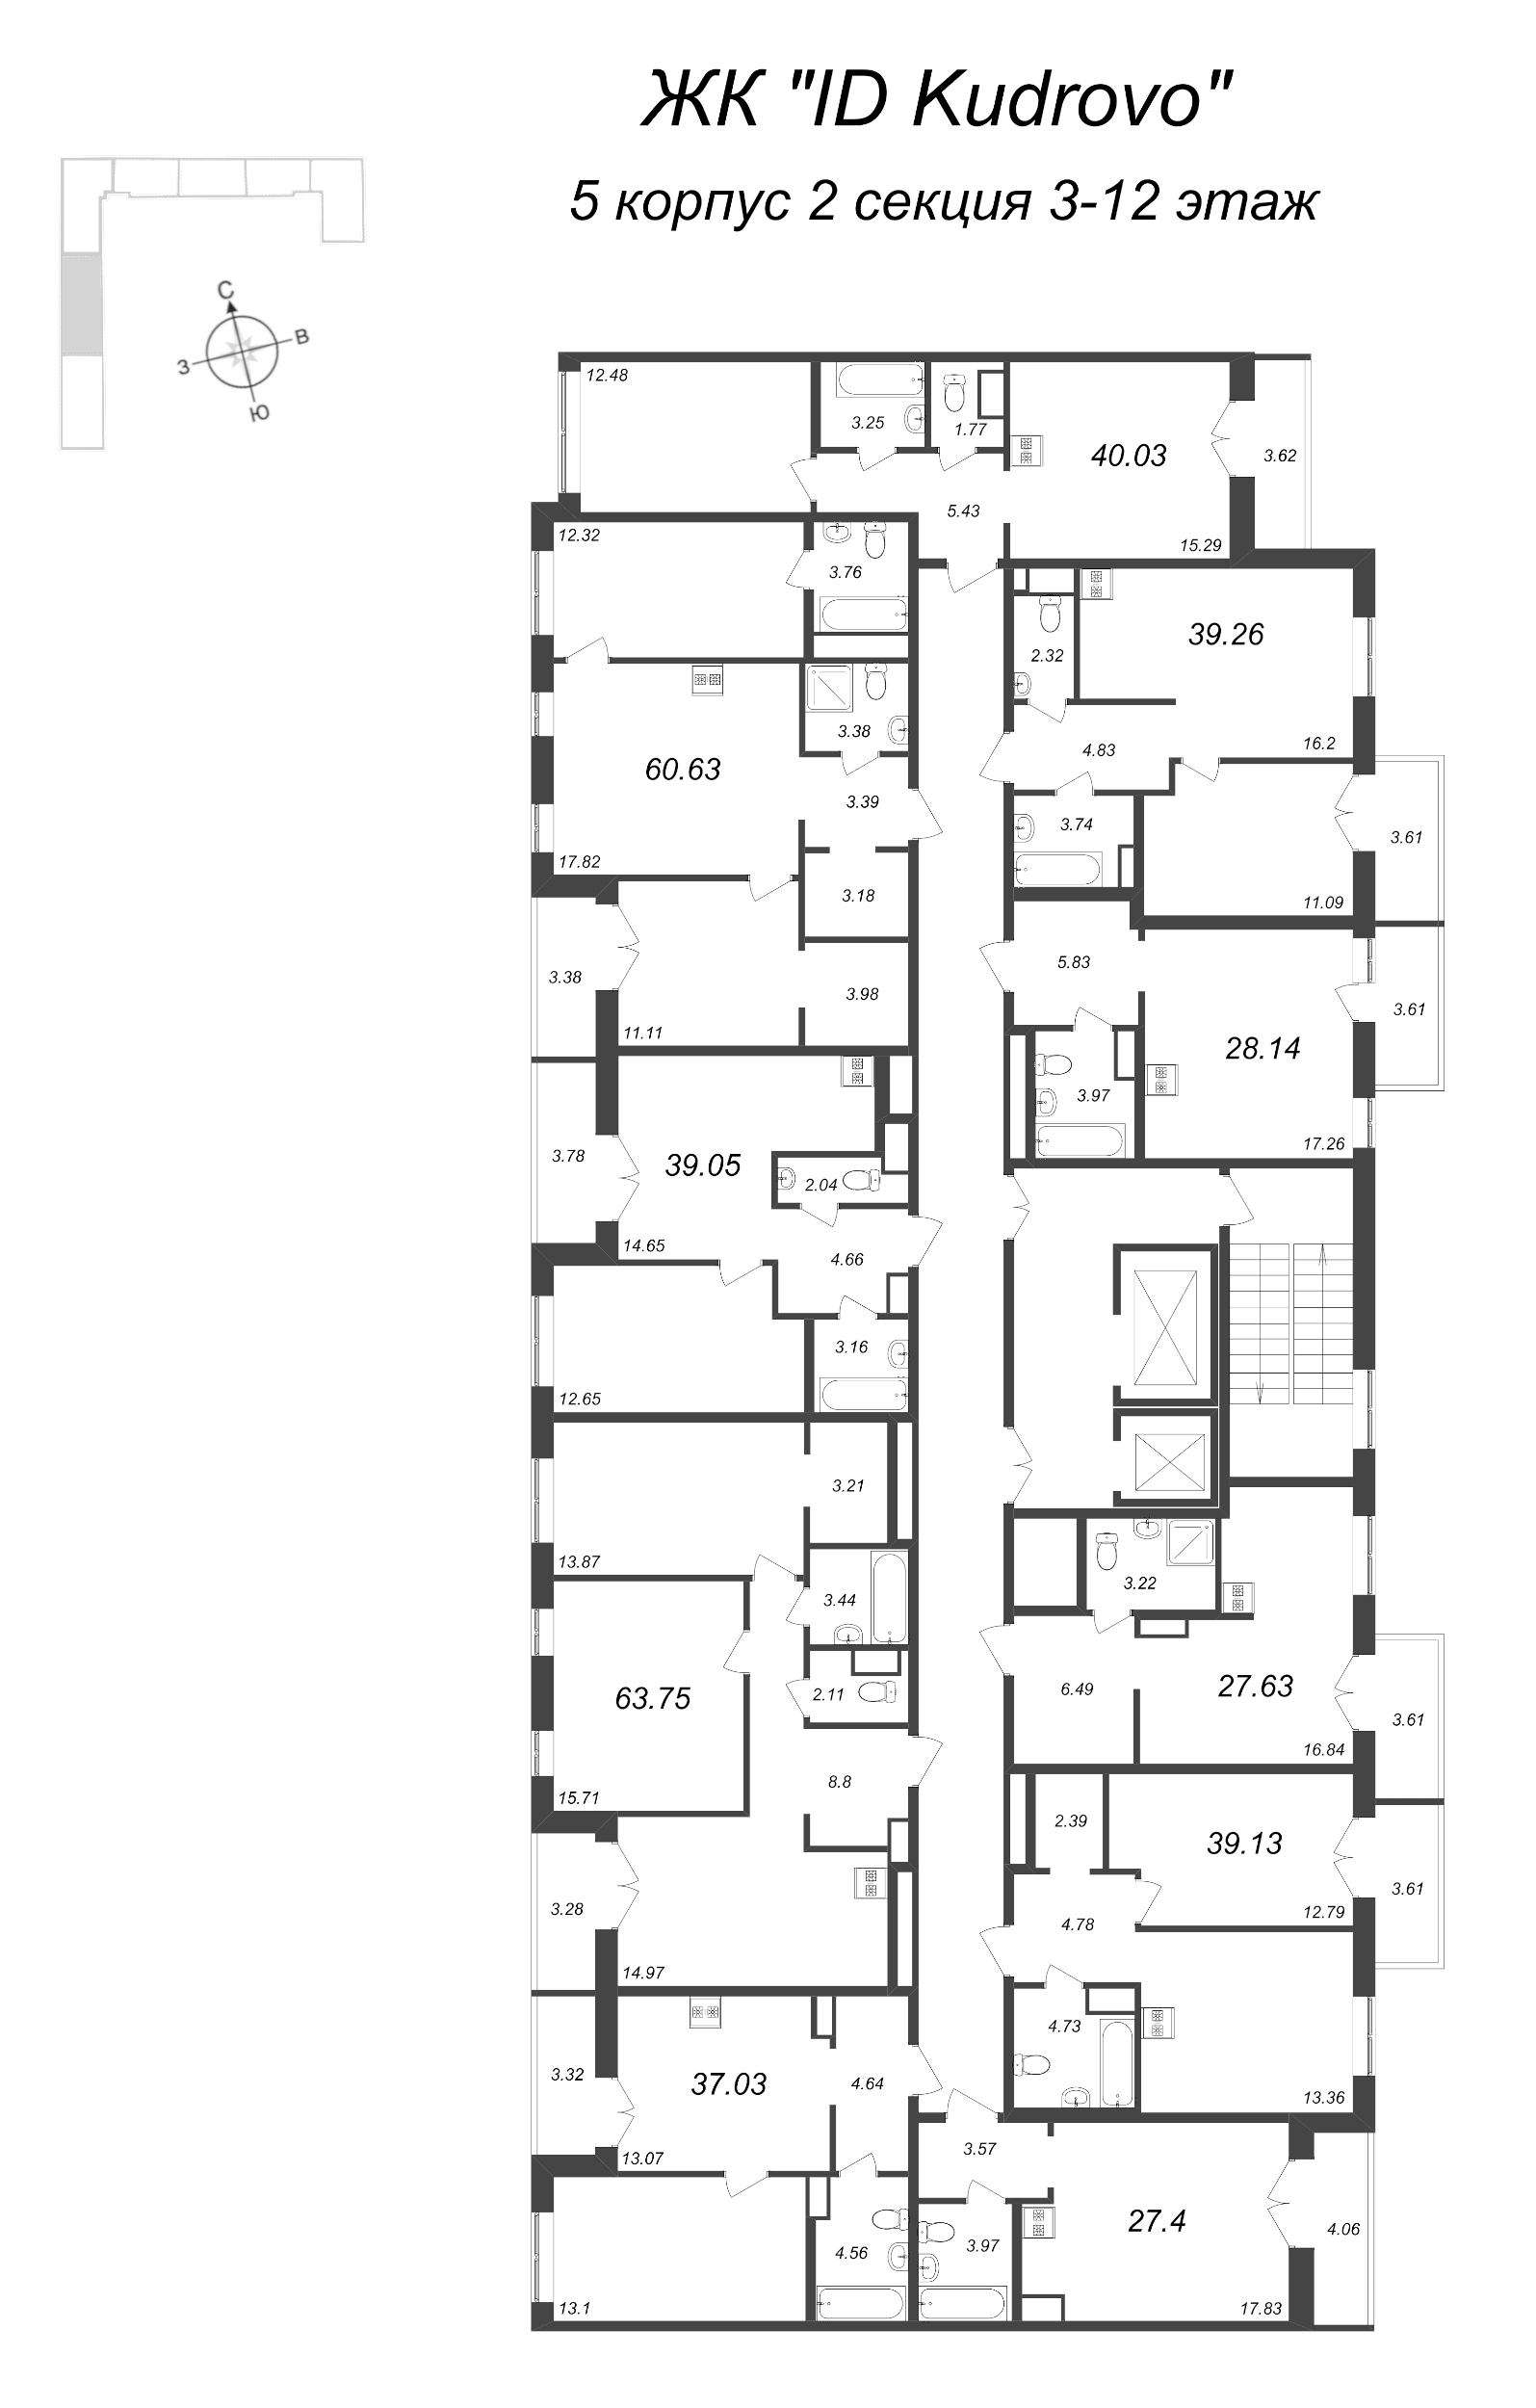 Квартира-студия, 27.4 м² в ЖК "ID Kudrovo" - планировка этажа